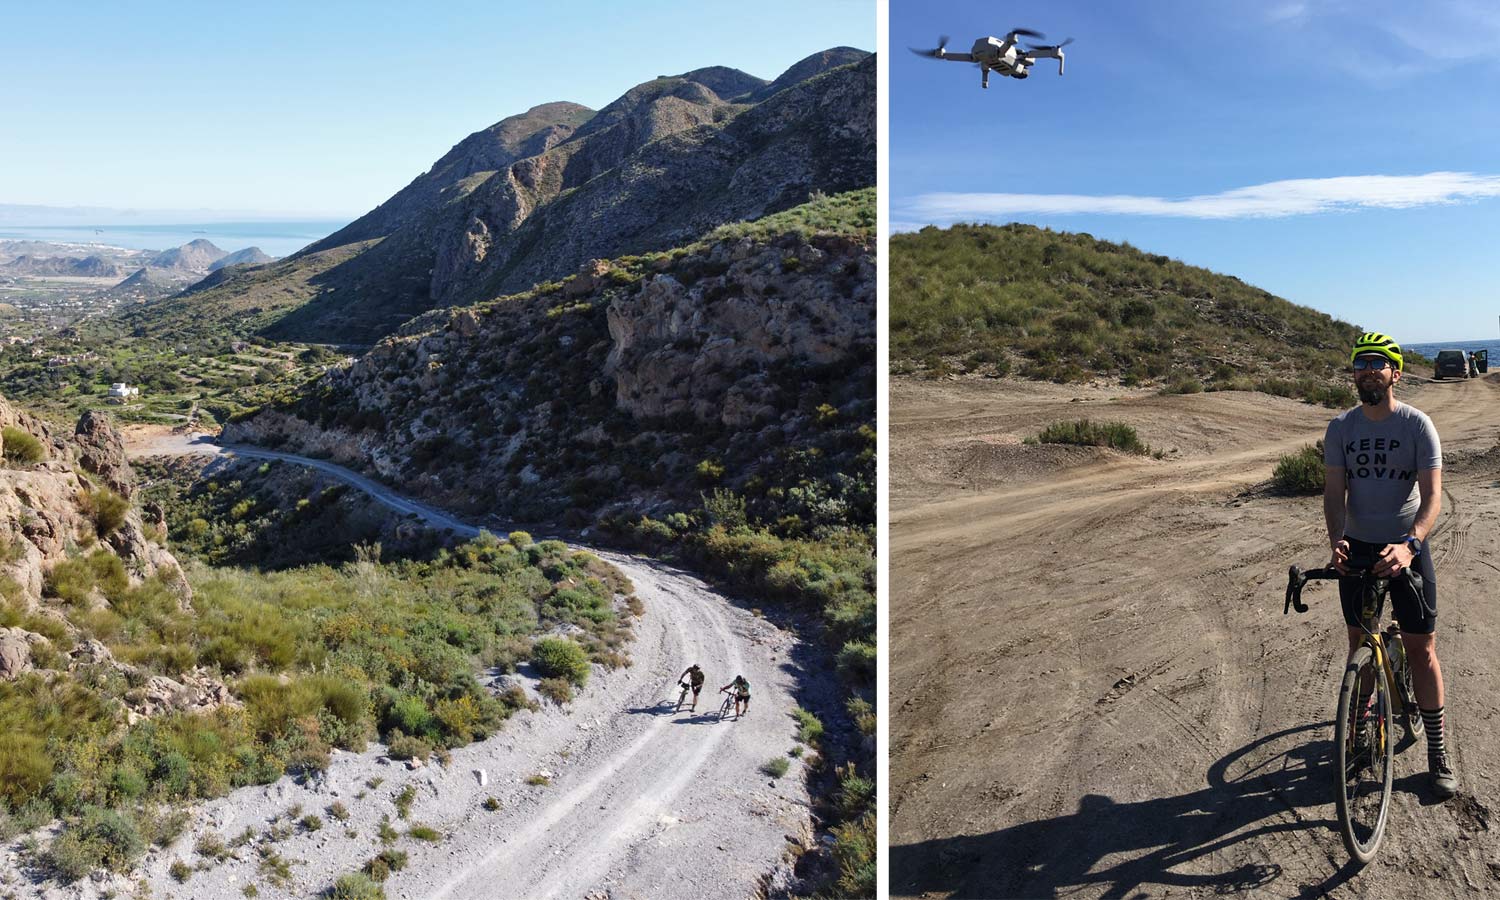 Best of 2020 Bikerumor Editors Choice Mavic Mini drone